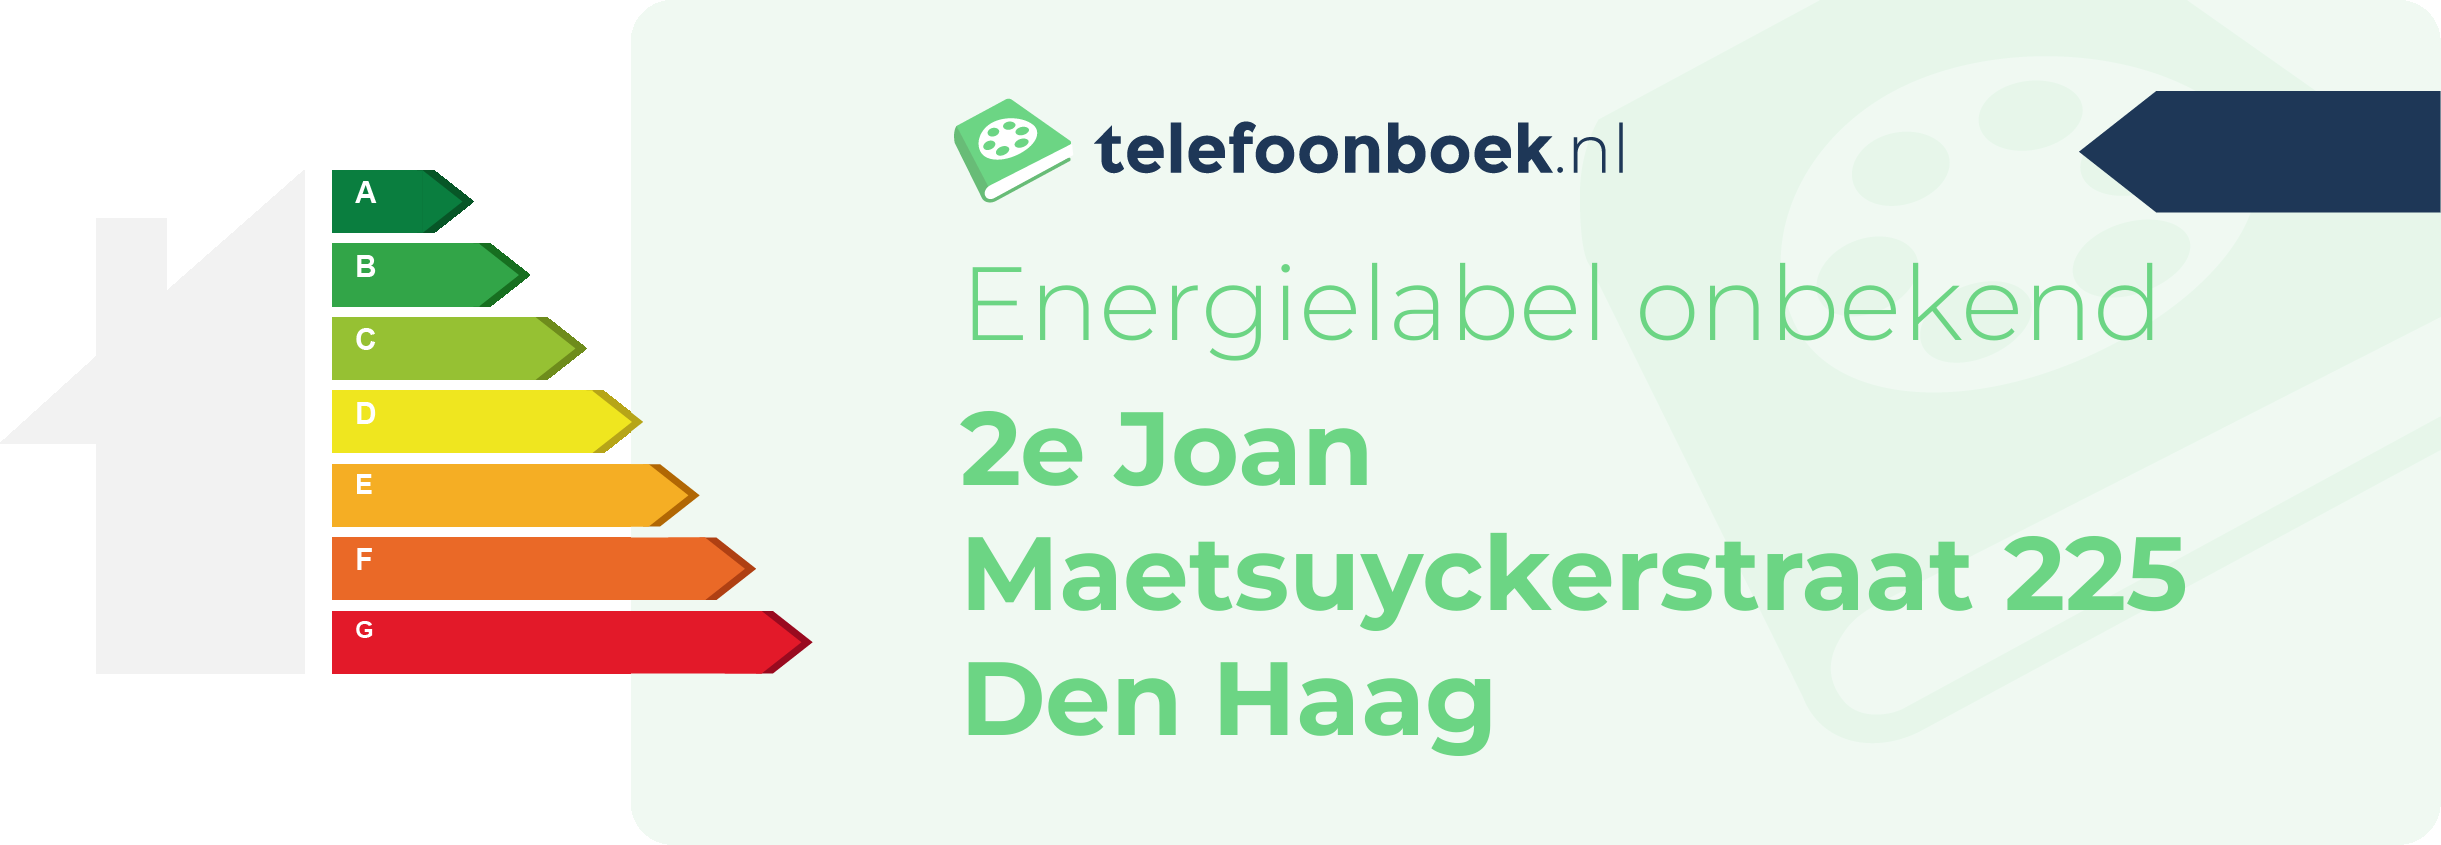 Energielabel 2e Joan Maetsuyckerstraat 225 Den Haag